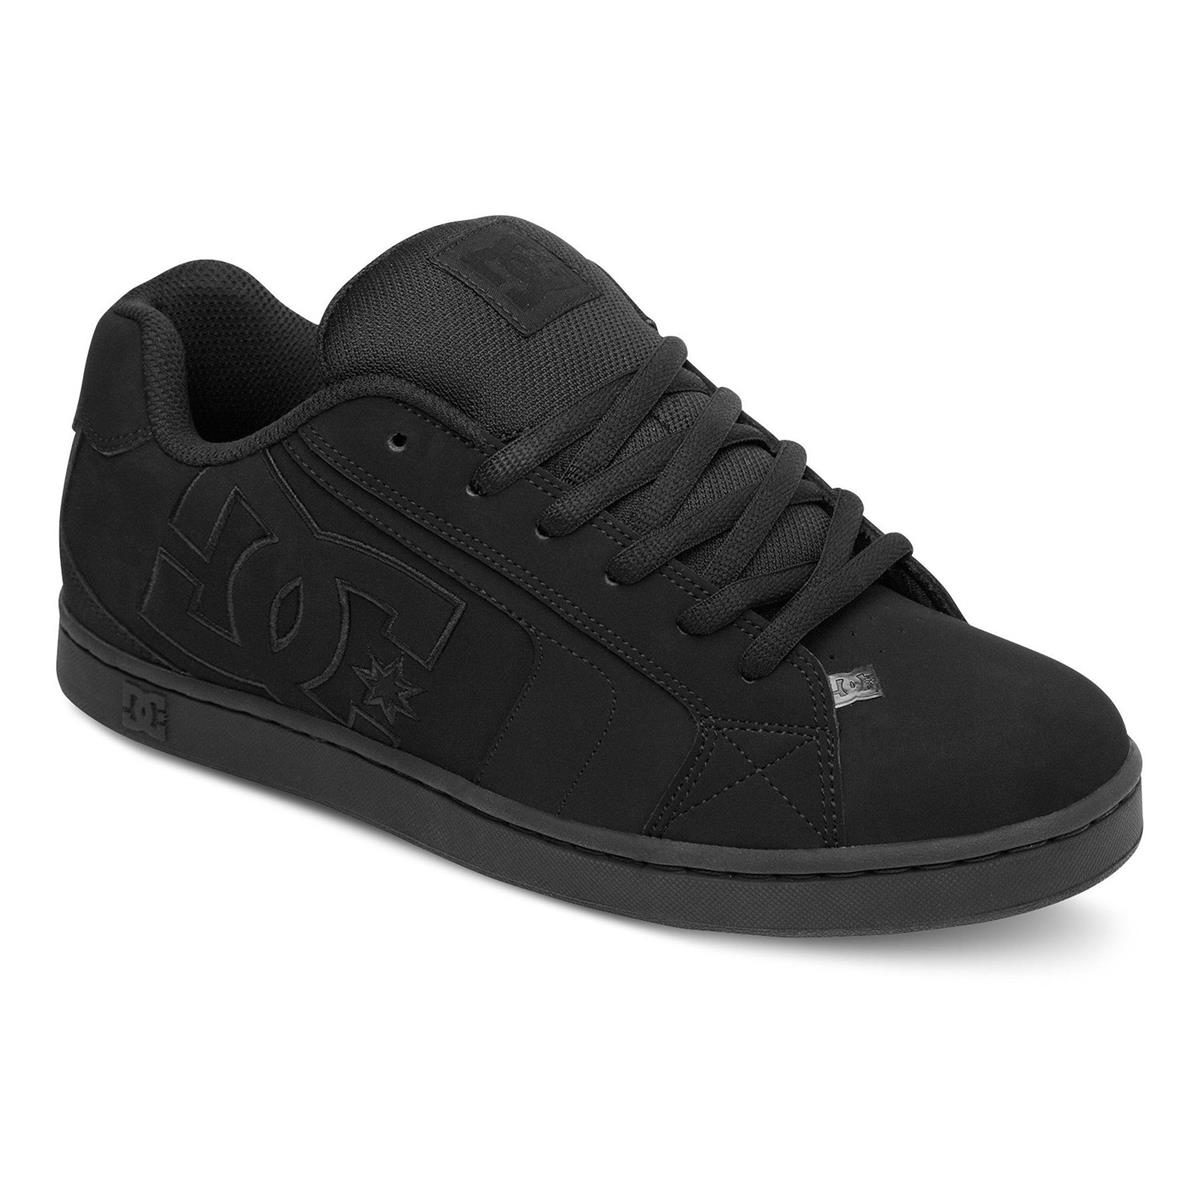 DC Shoes Net Black/Black/Black